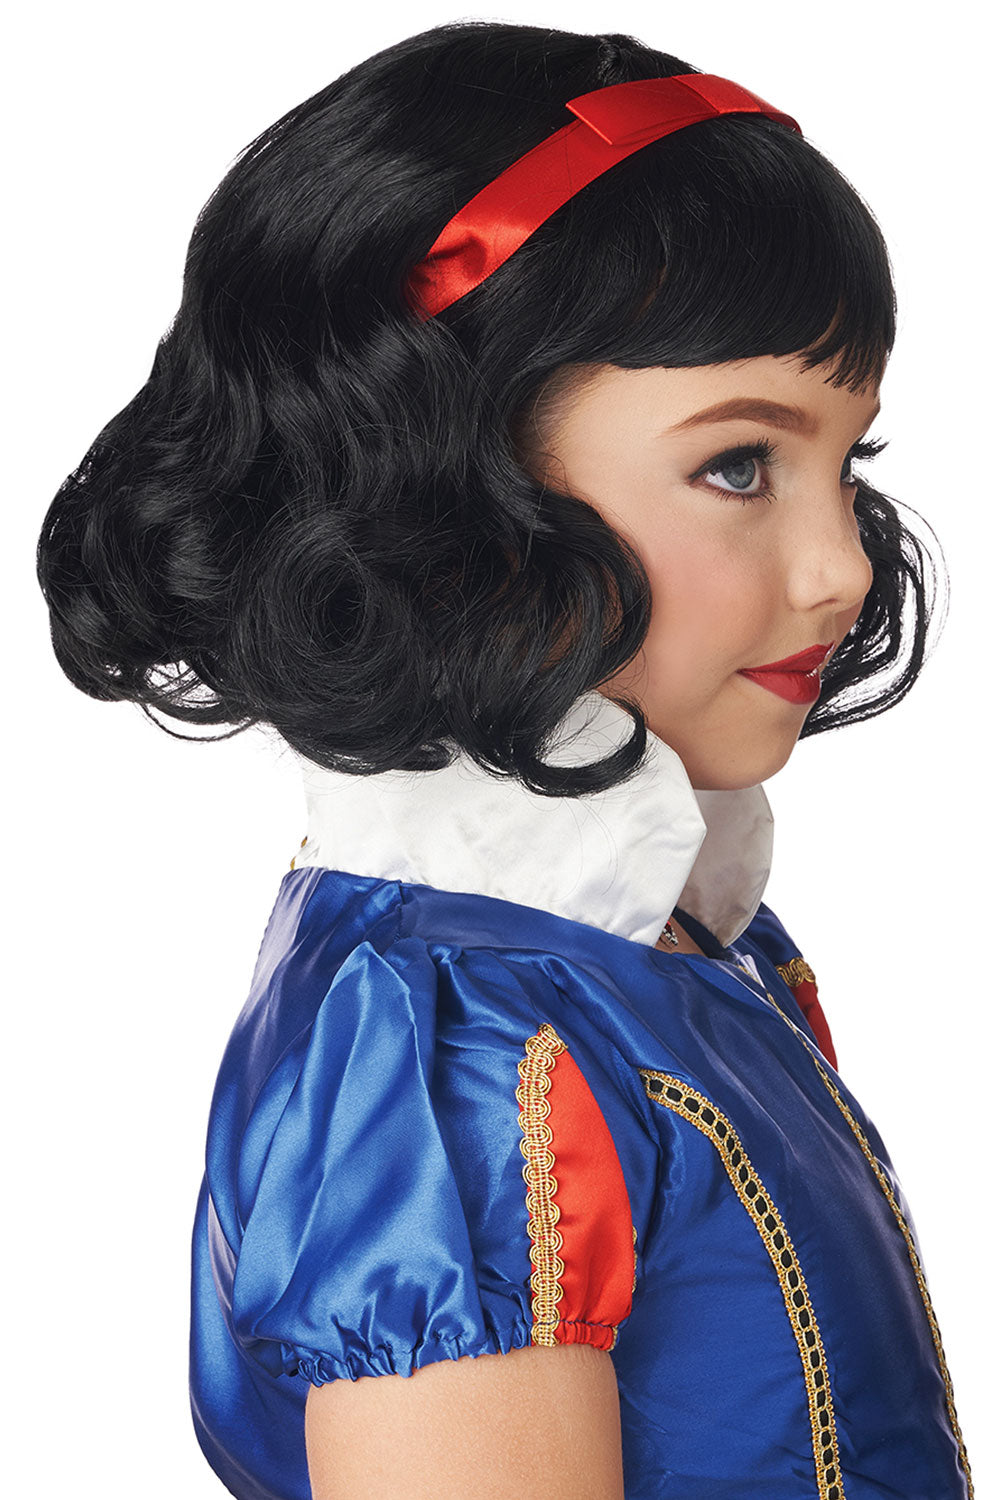 Snow White Child Wig California Costume 7021-200